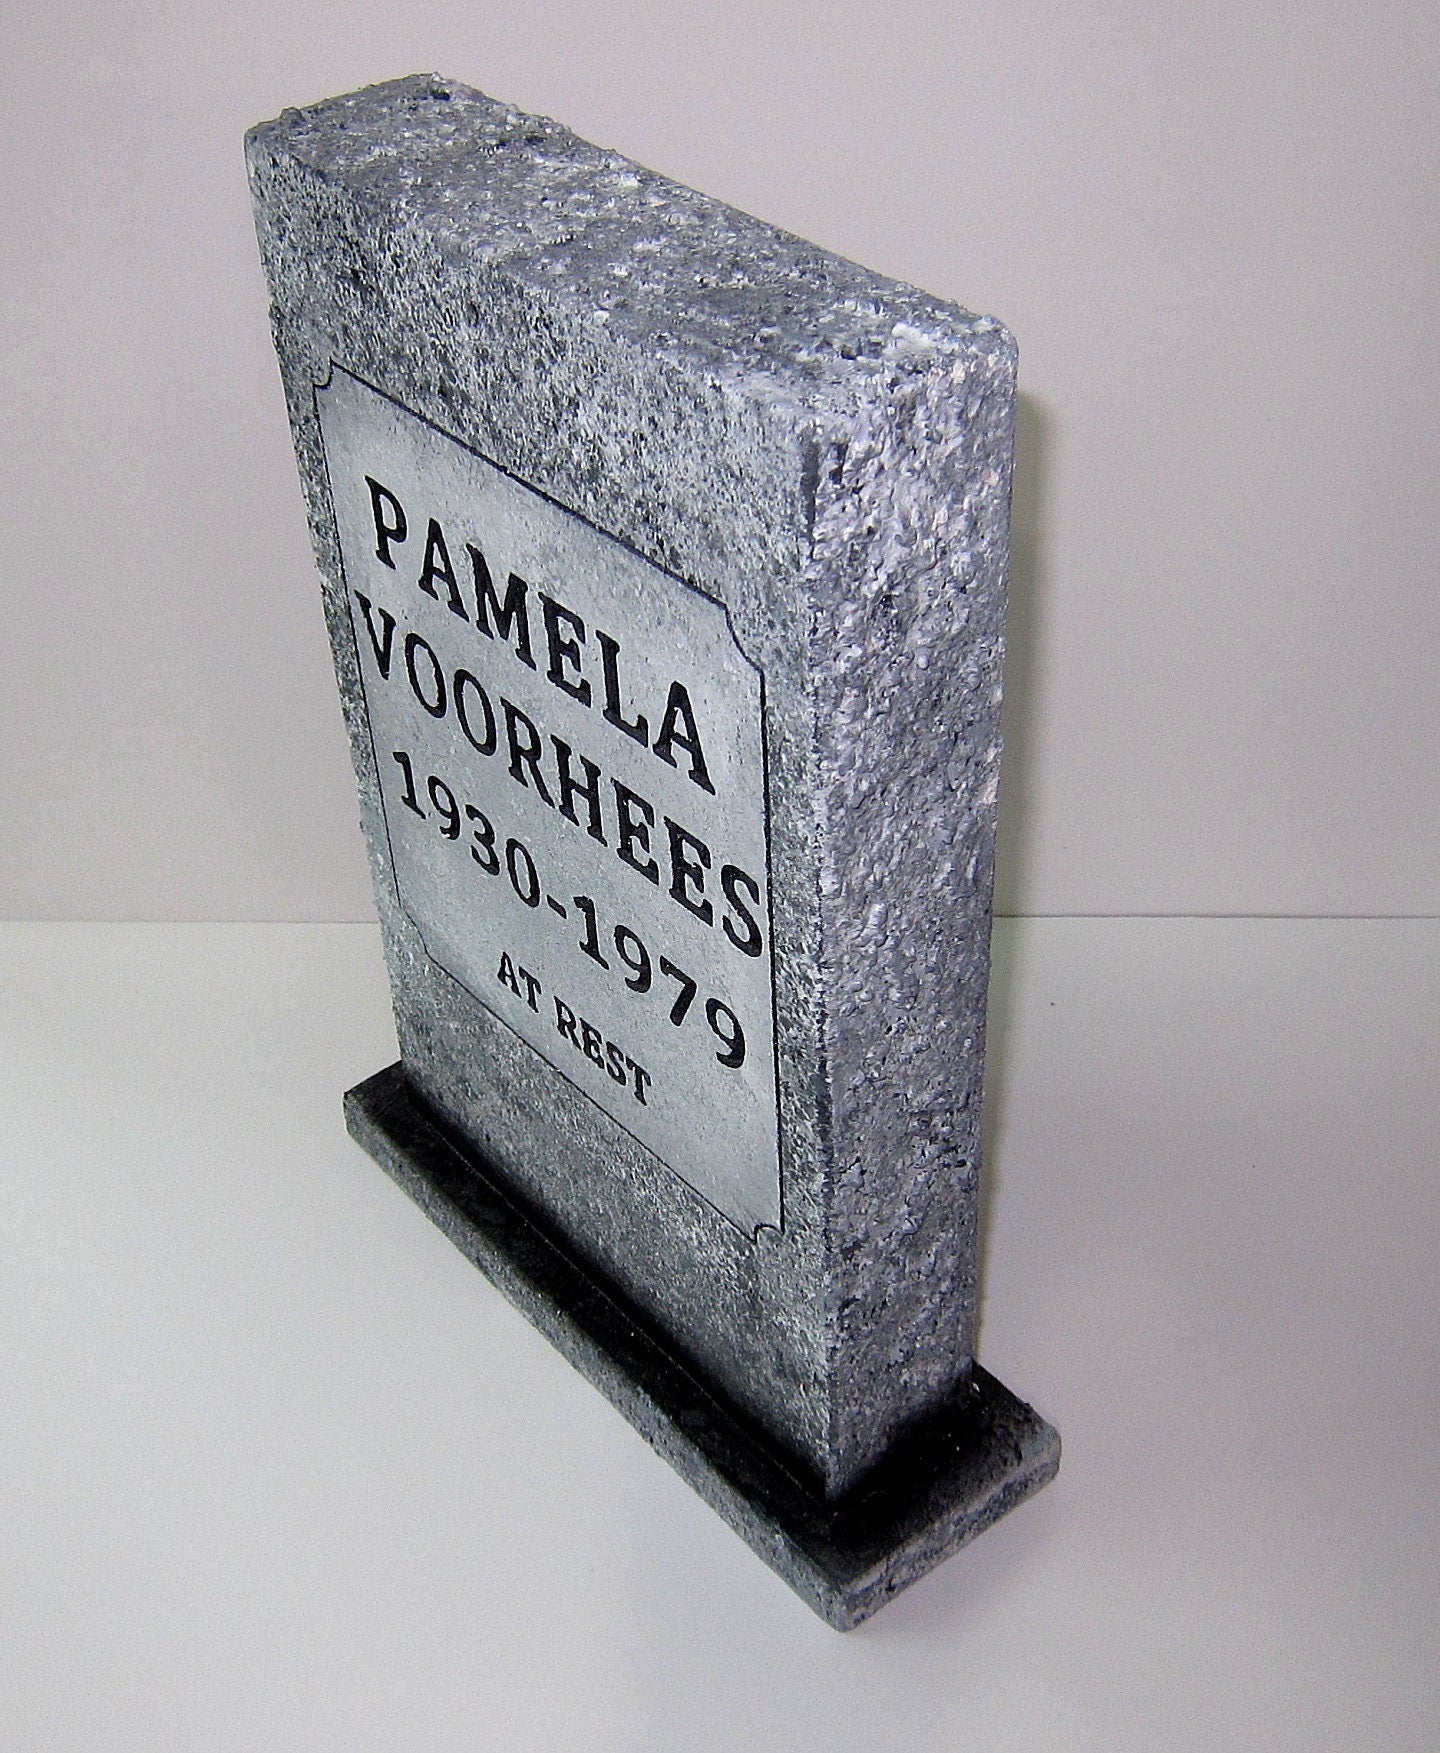 Pamela Voorhees Friday the 13th MINI Tombstone Prop